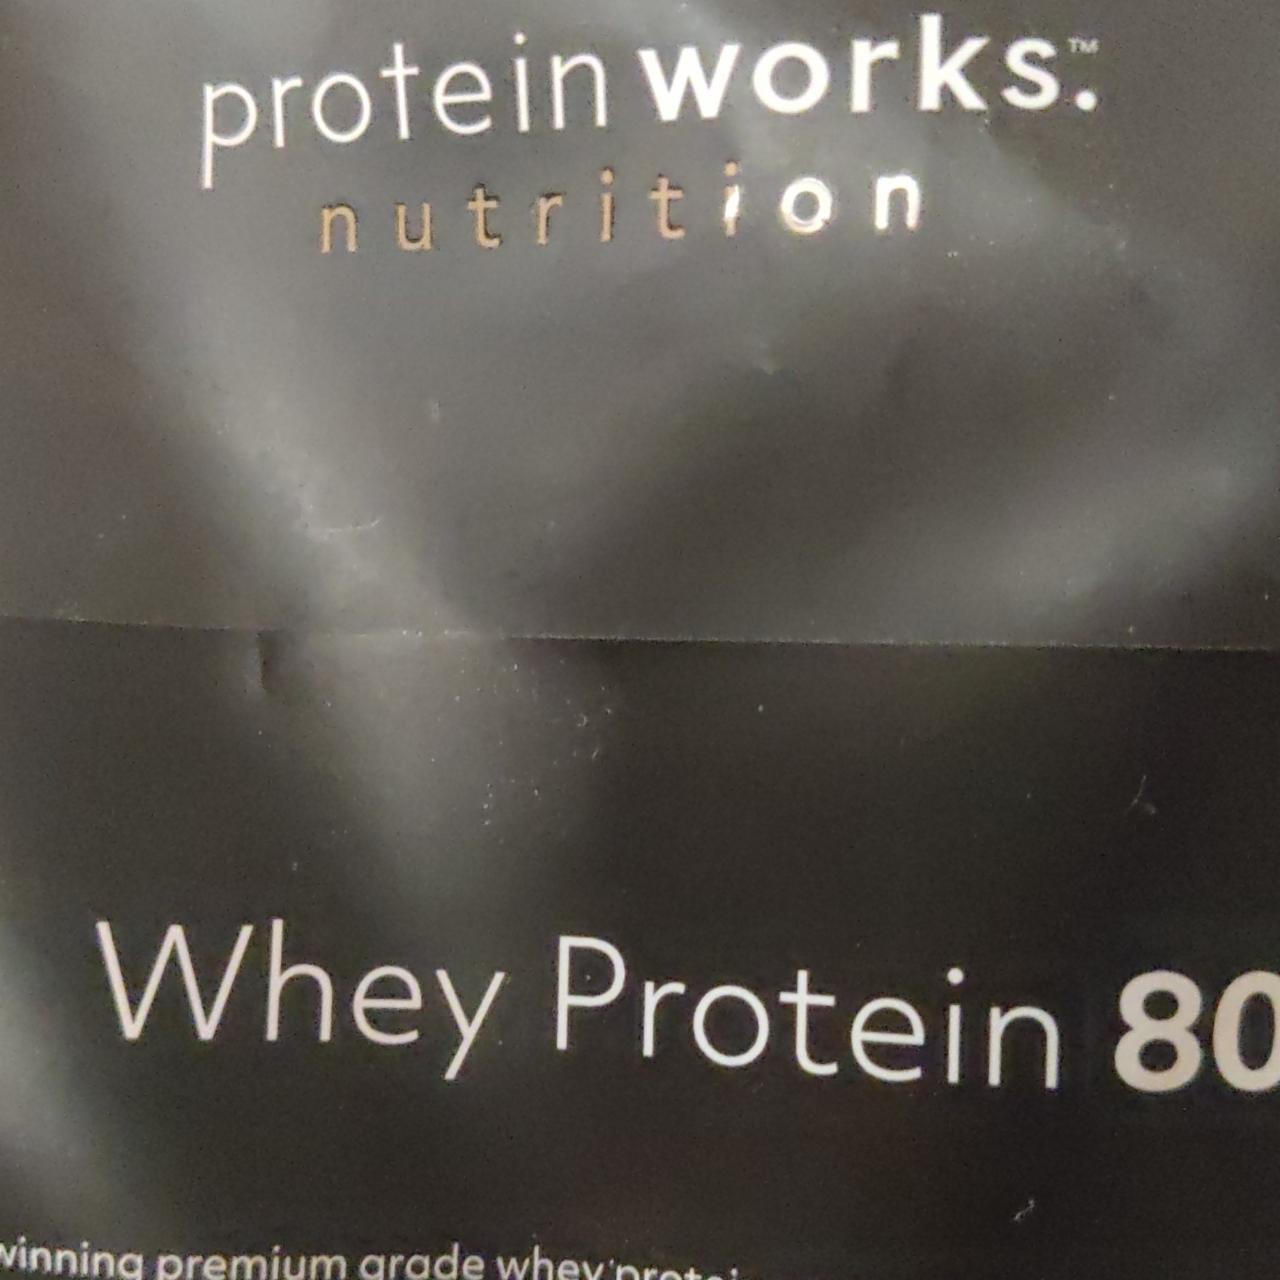 Fotografie - Whey protein 80 salted caramel bandit protein works nutrition